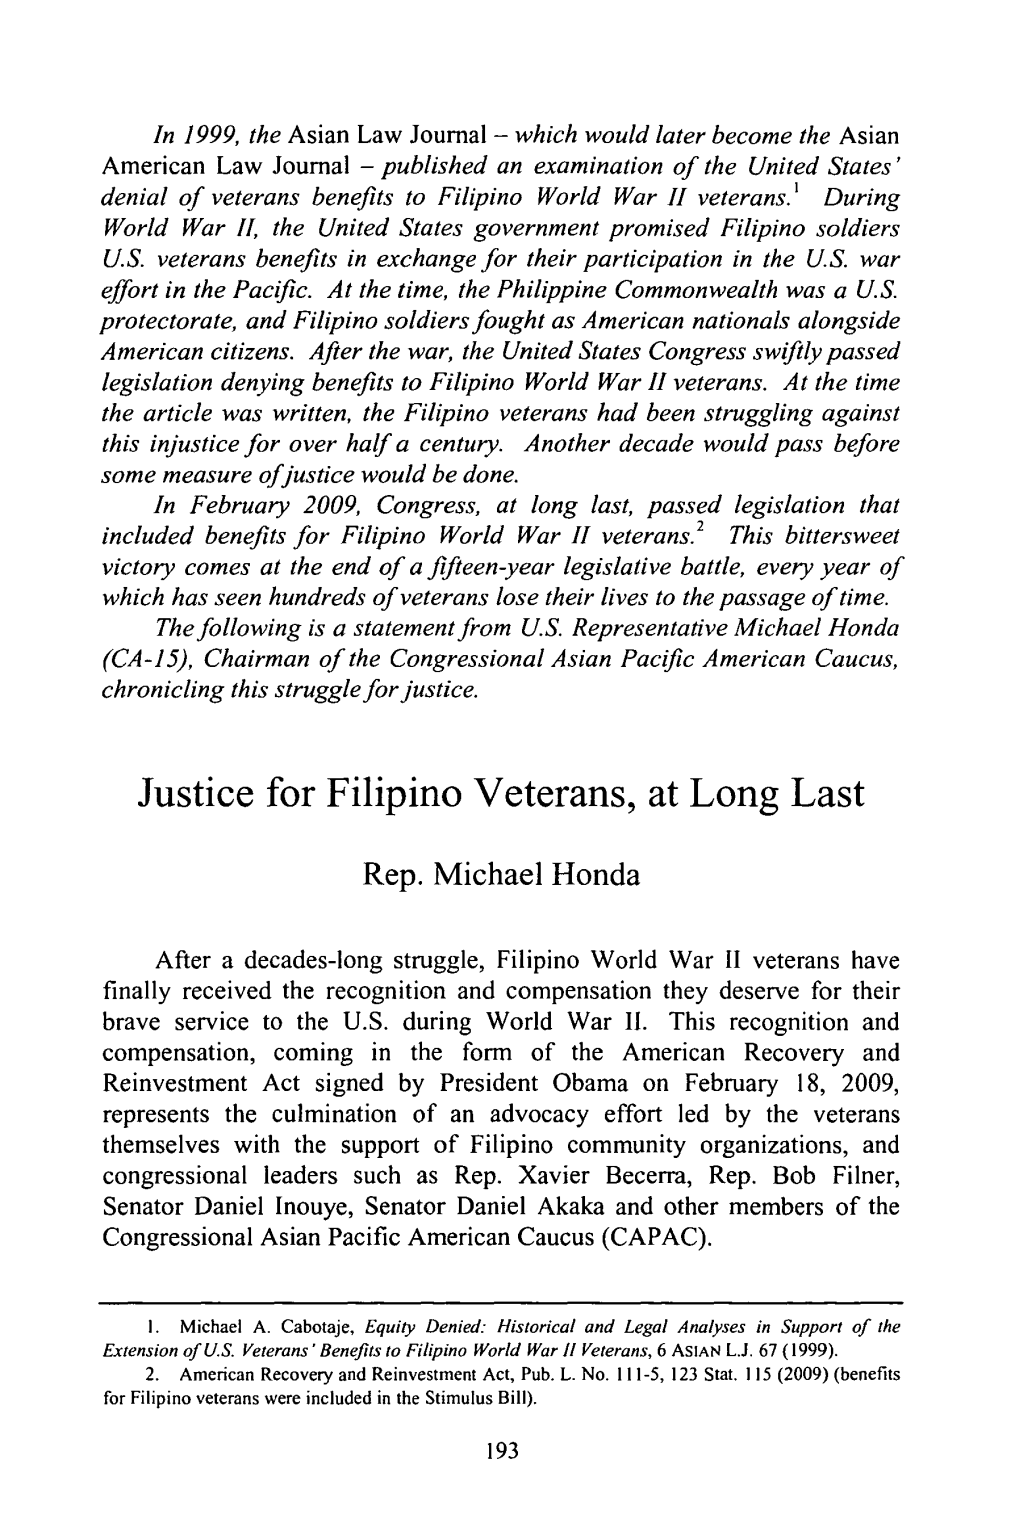 Justice for Filipino Veterans, at Long Last